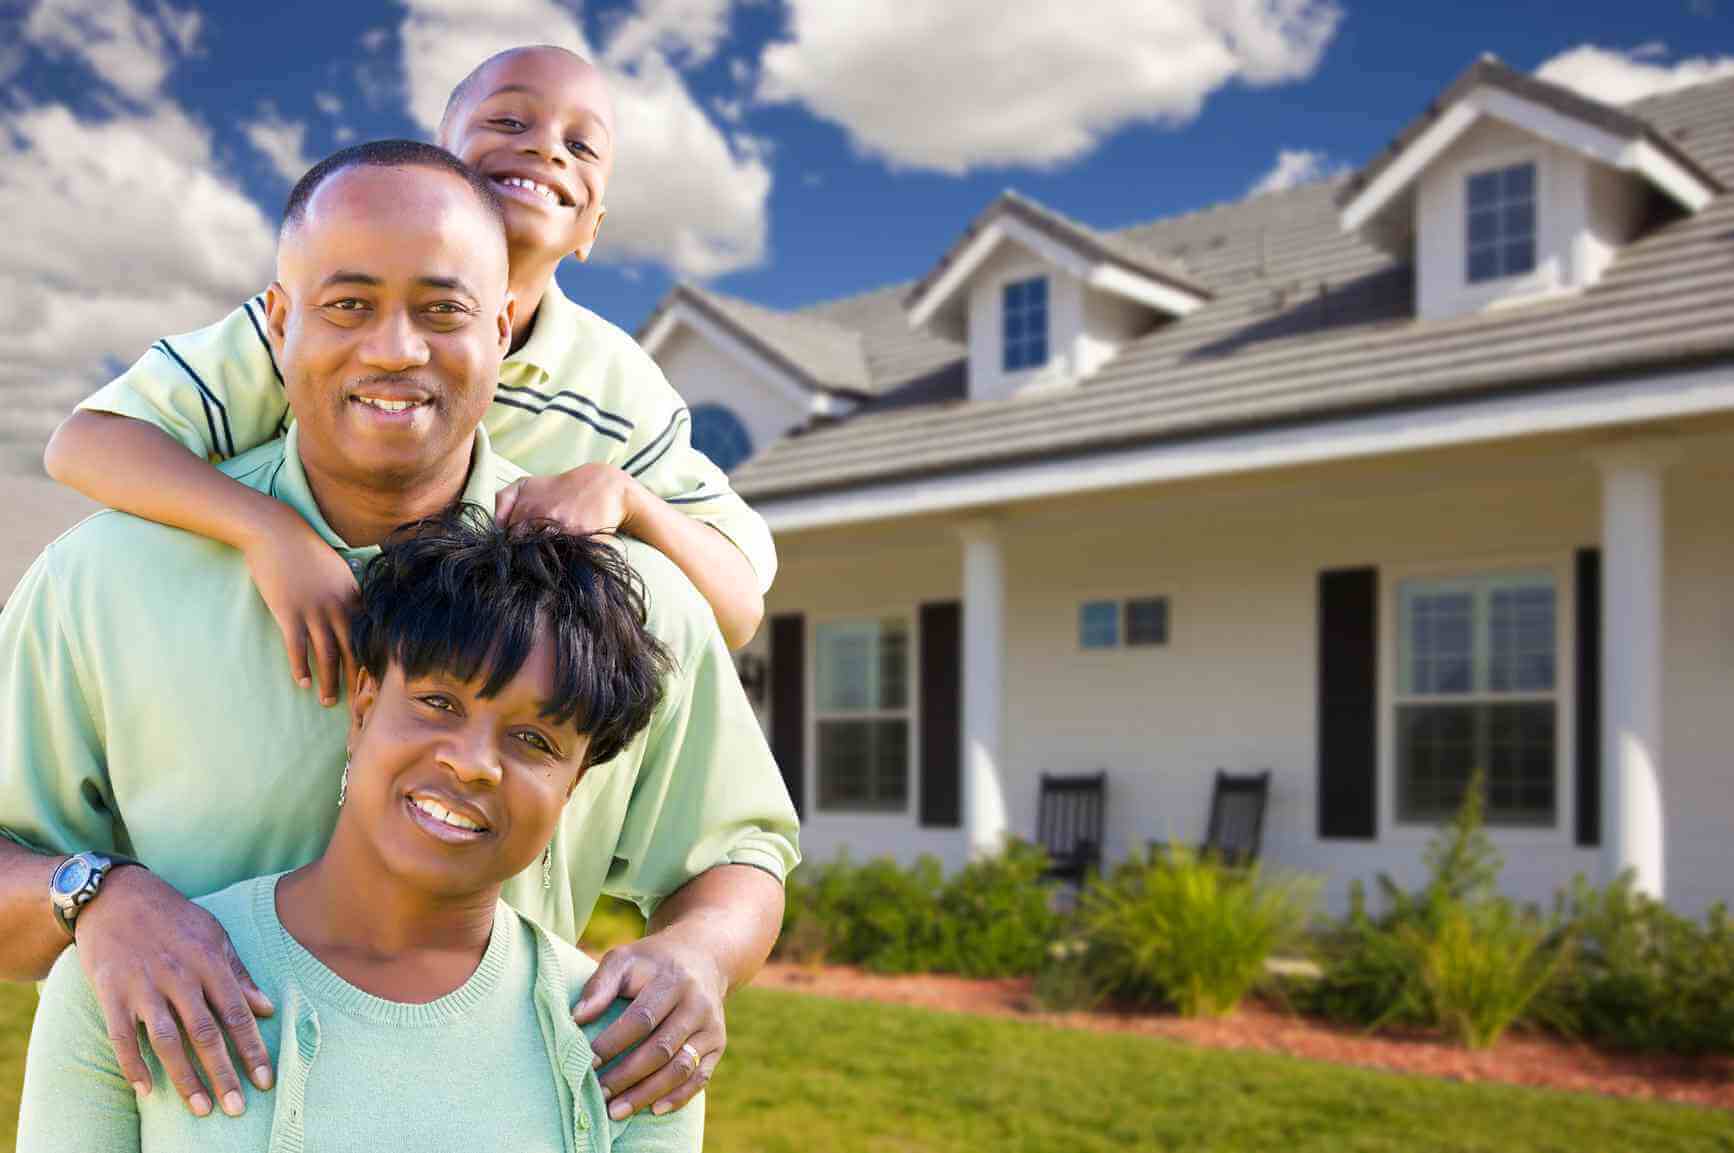 Homeowners Insurance Checklist & Insurance Savings Tips